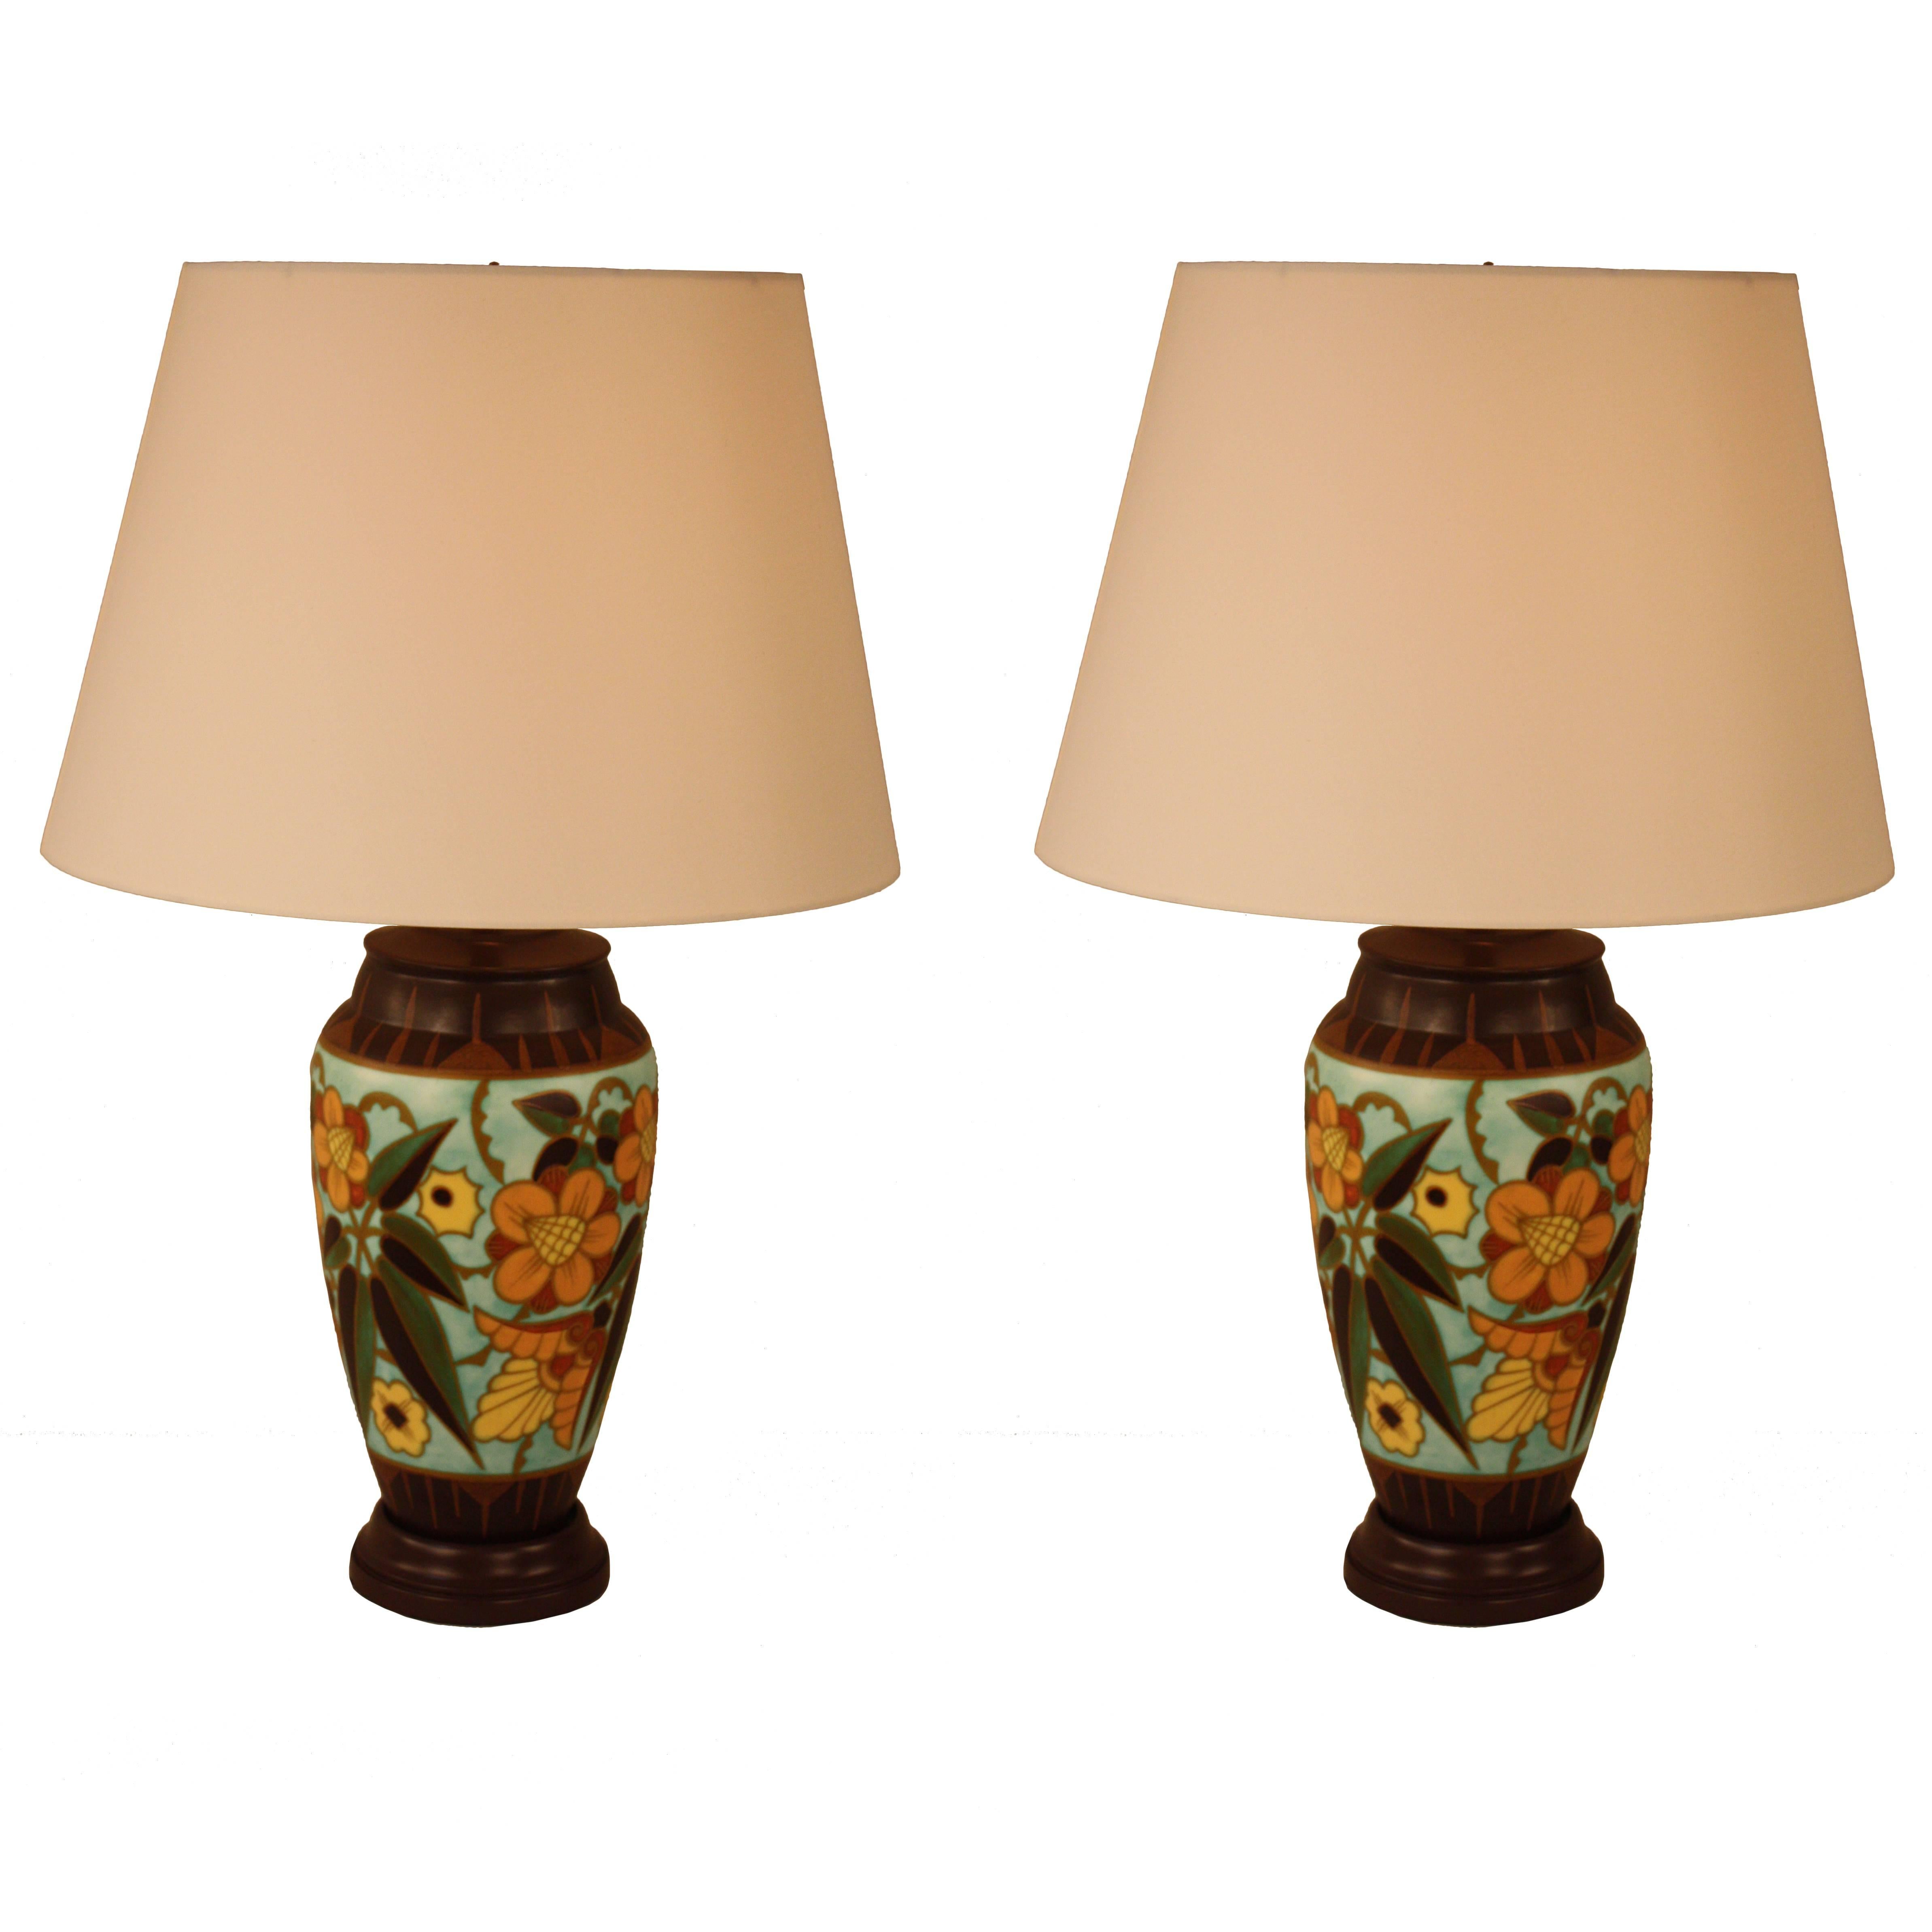 Beautiful Pair of Art Deco Table Lamps by Boch Freres Keramis, Belgium